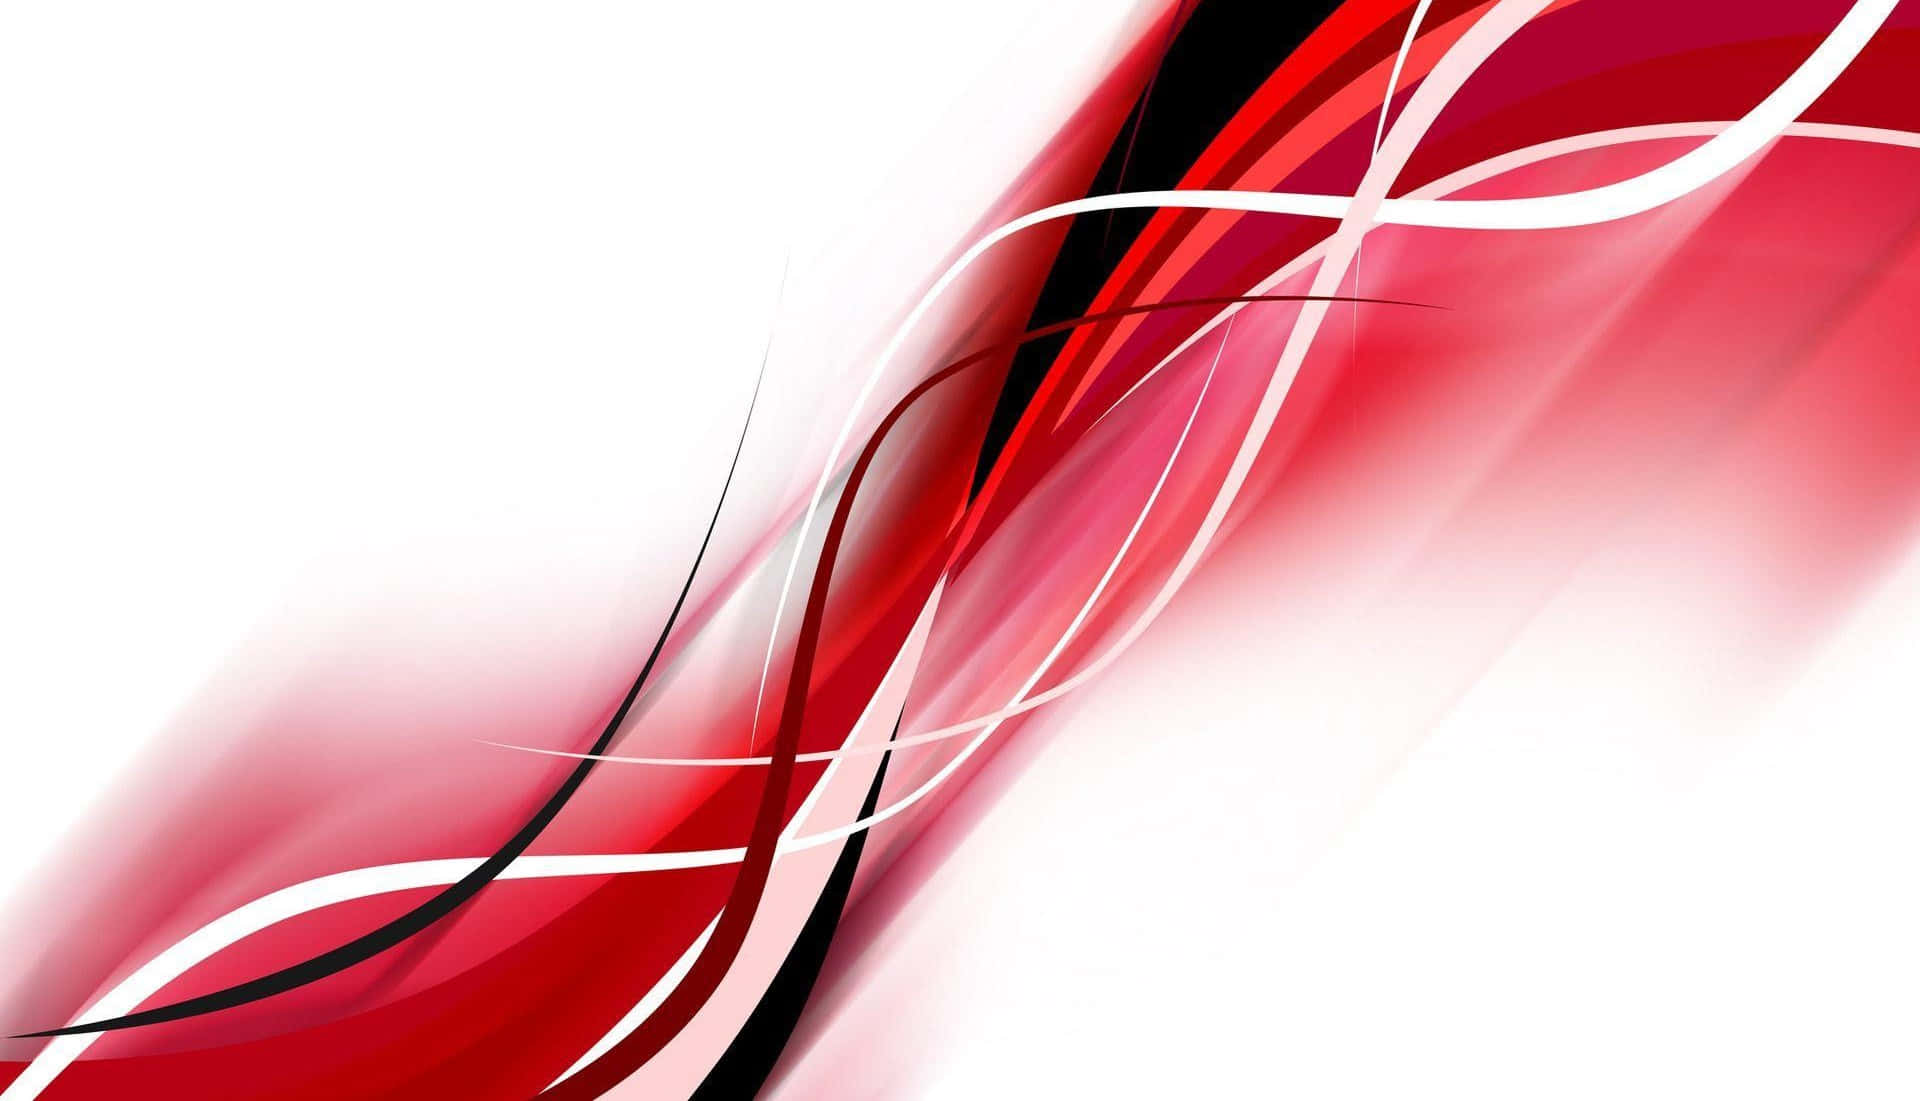 Vibrant Red&Black 1080p Background